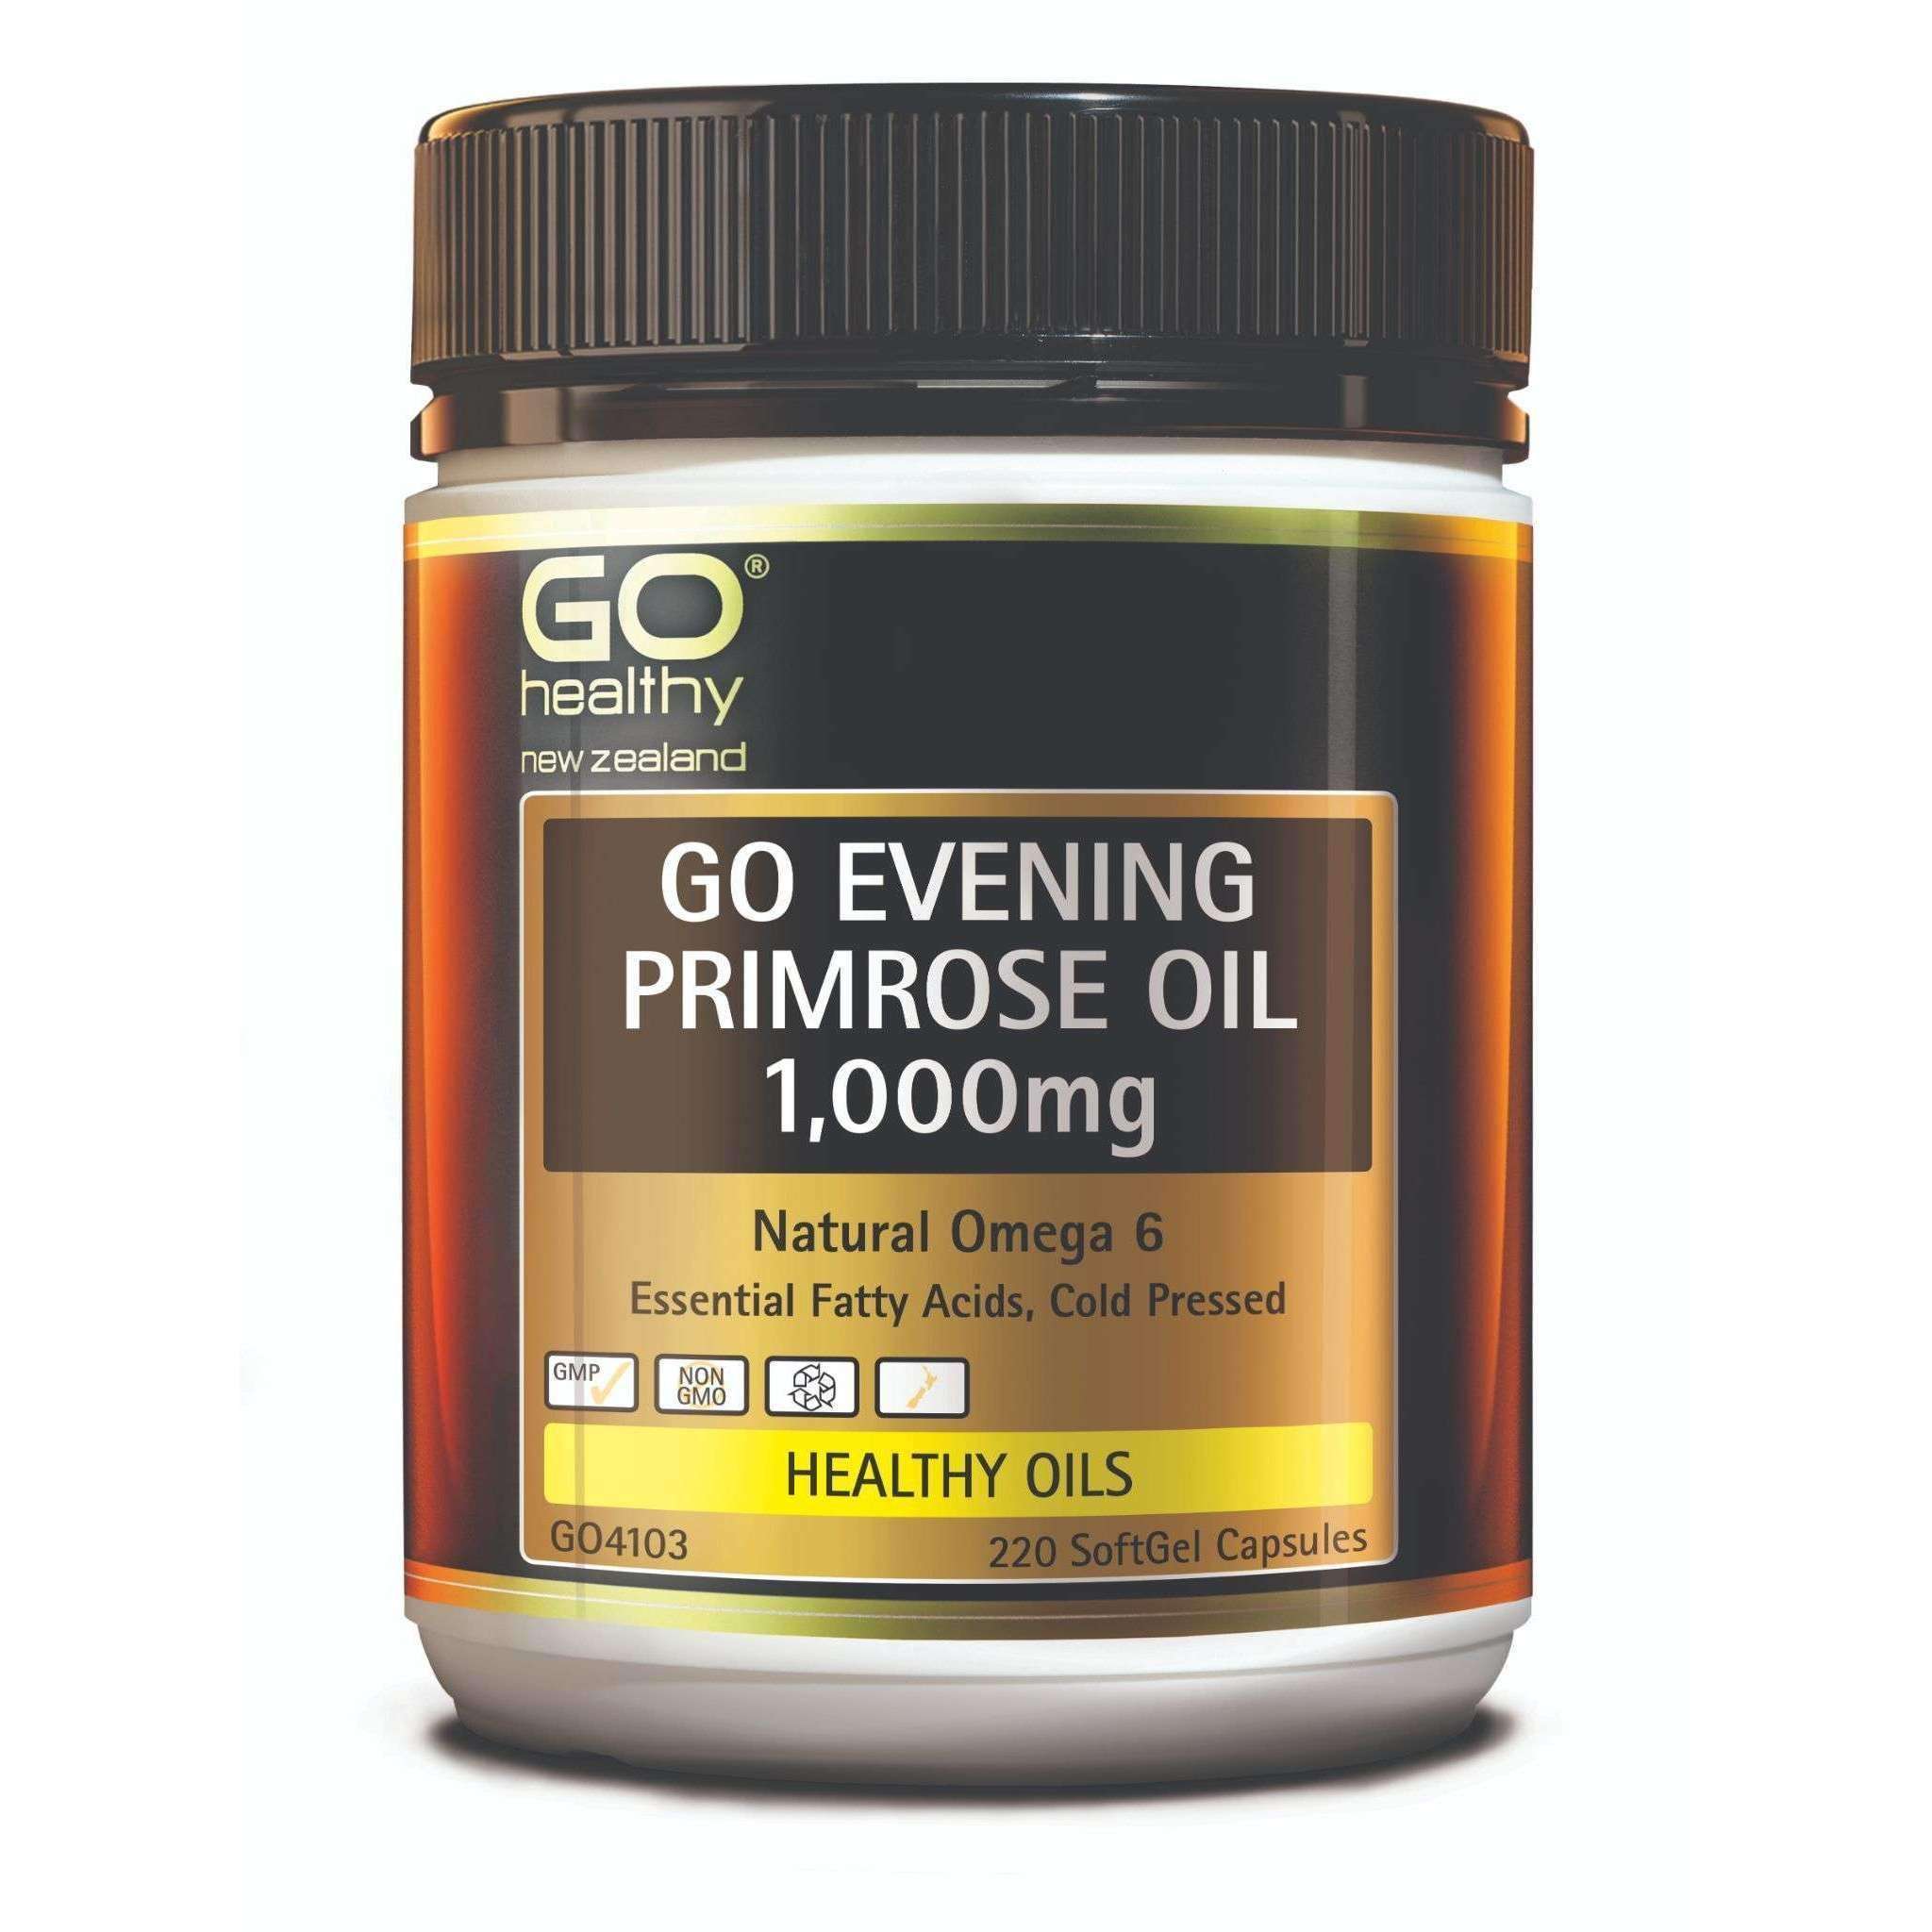 Go Healthy Go Evening Primrose Oil 1,000mg